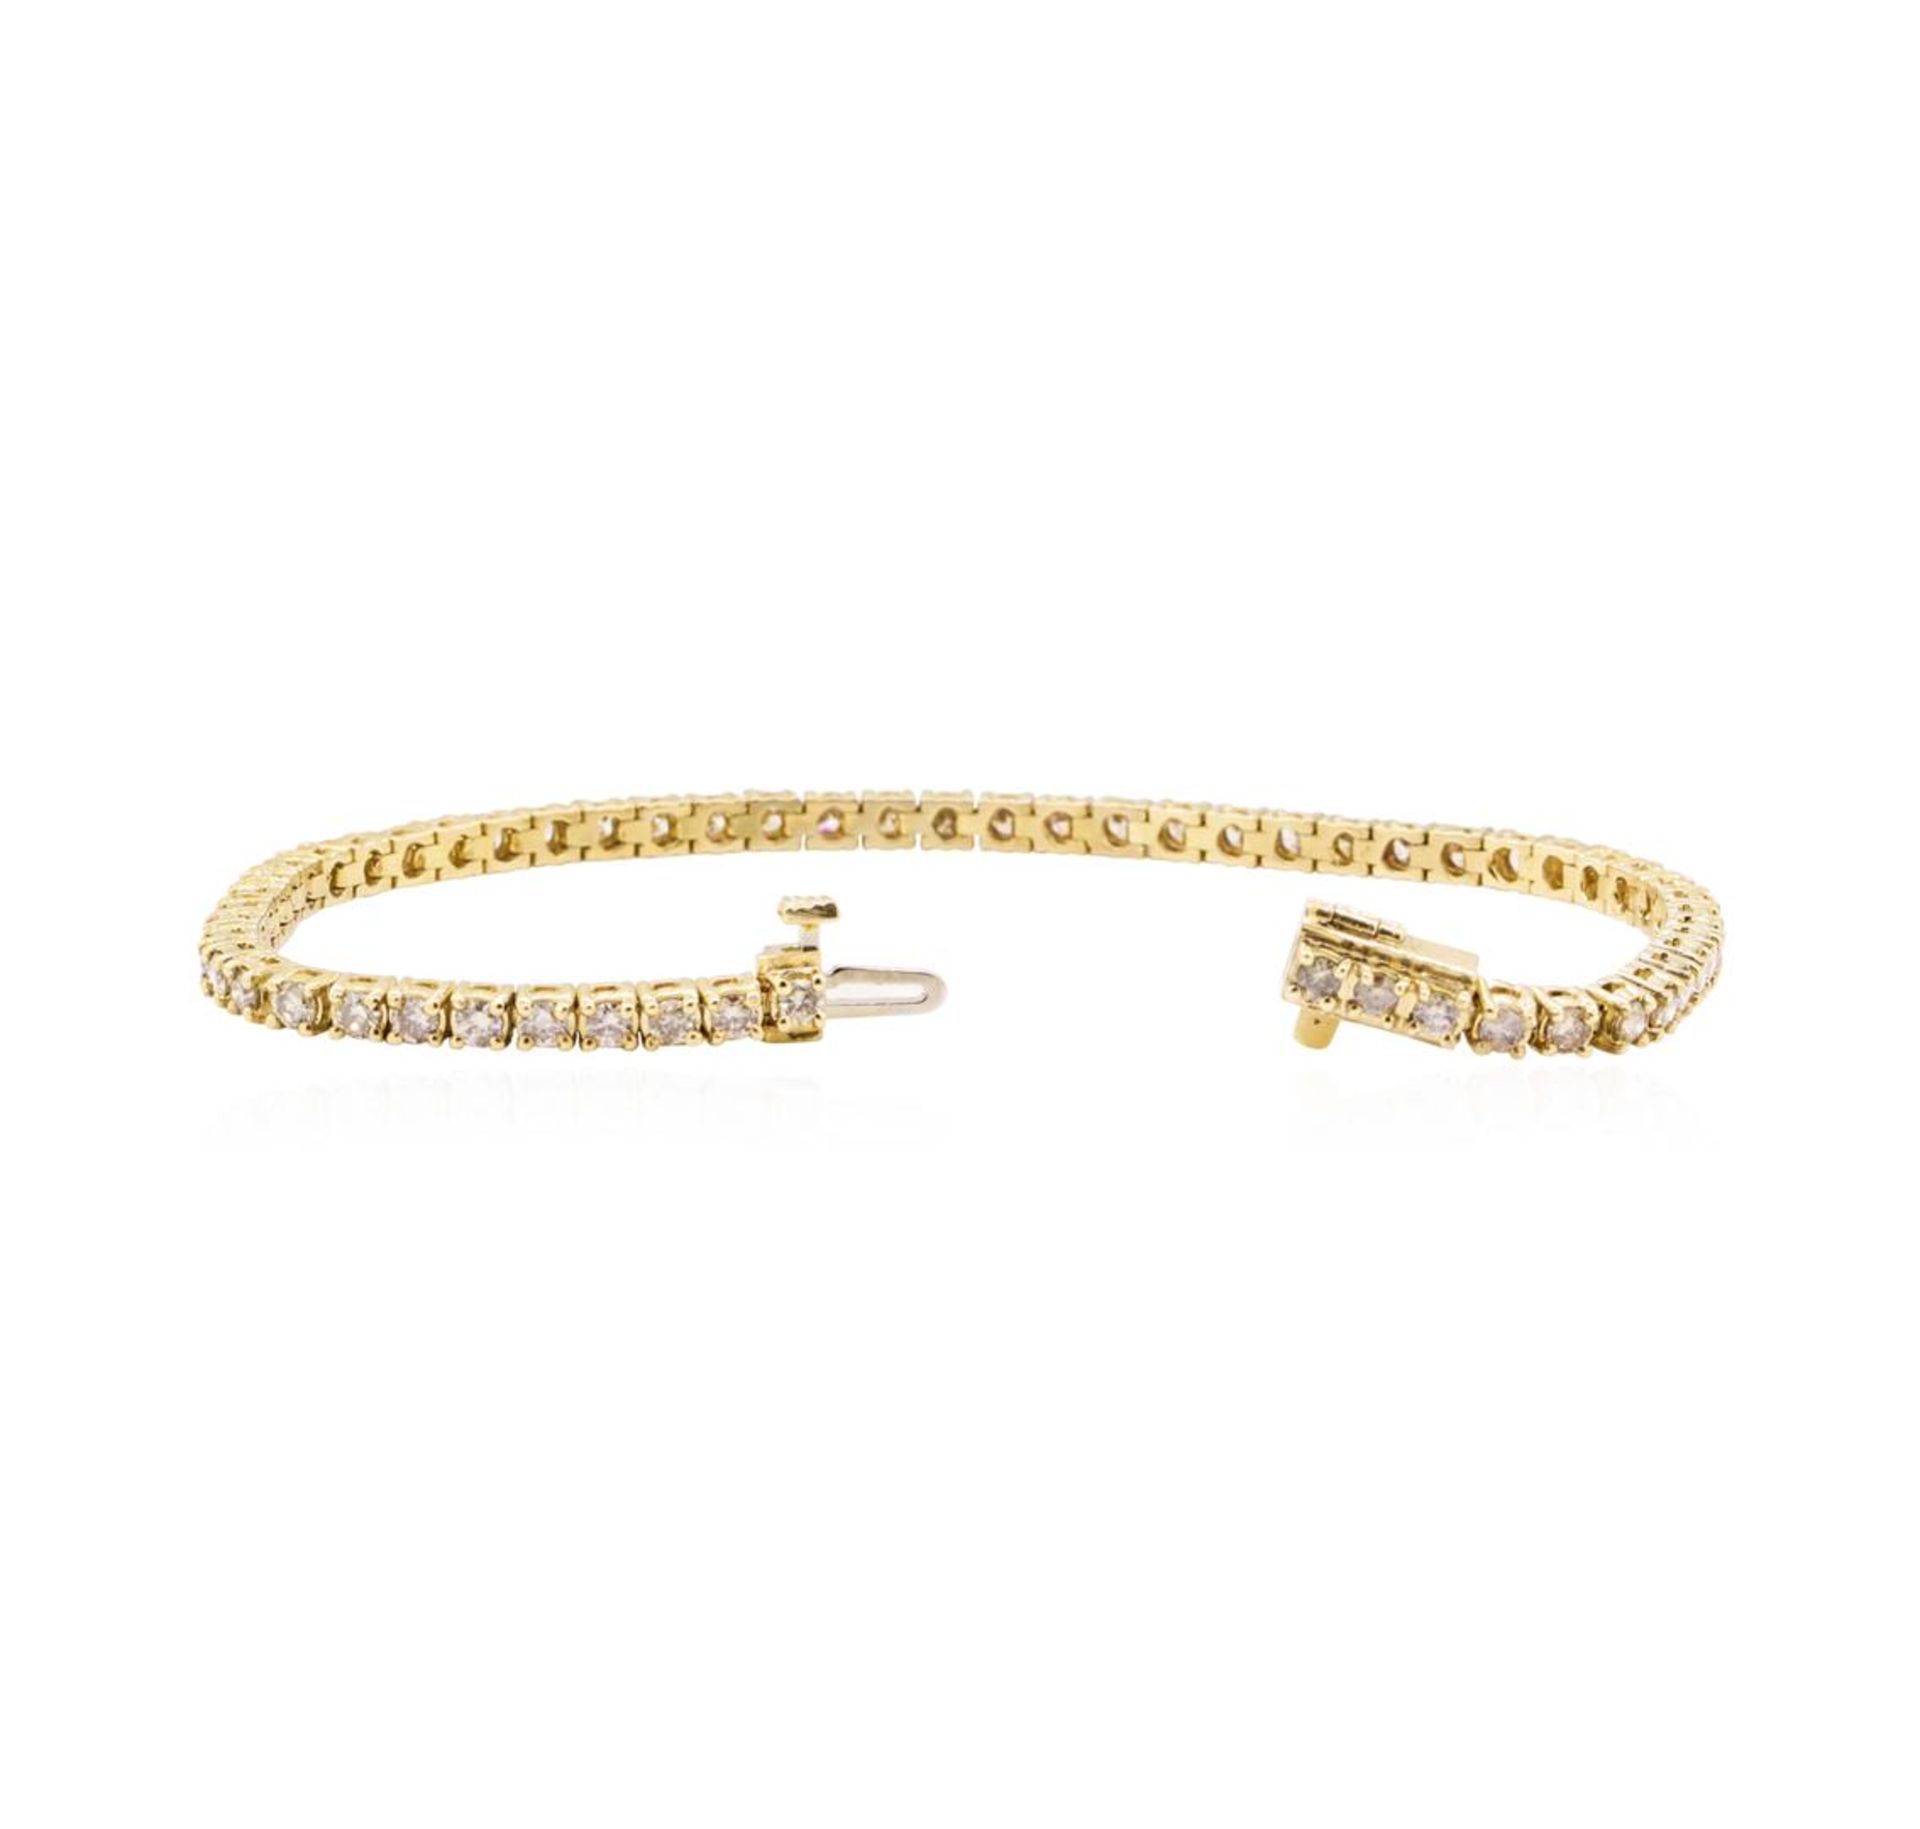 3.17 ctw Diamond Tennis Bracelet - 14KT Yellow Gold - Image 3 of 4